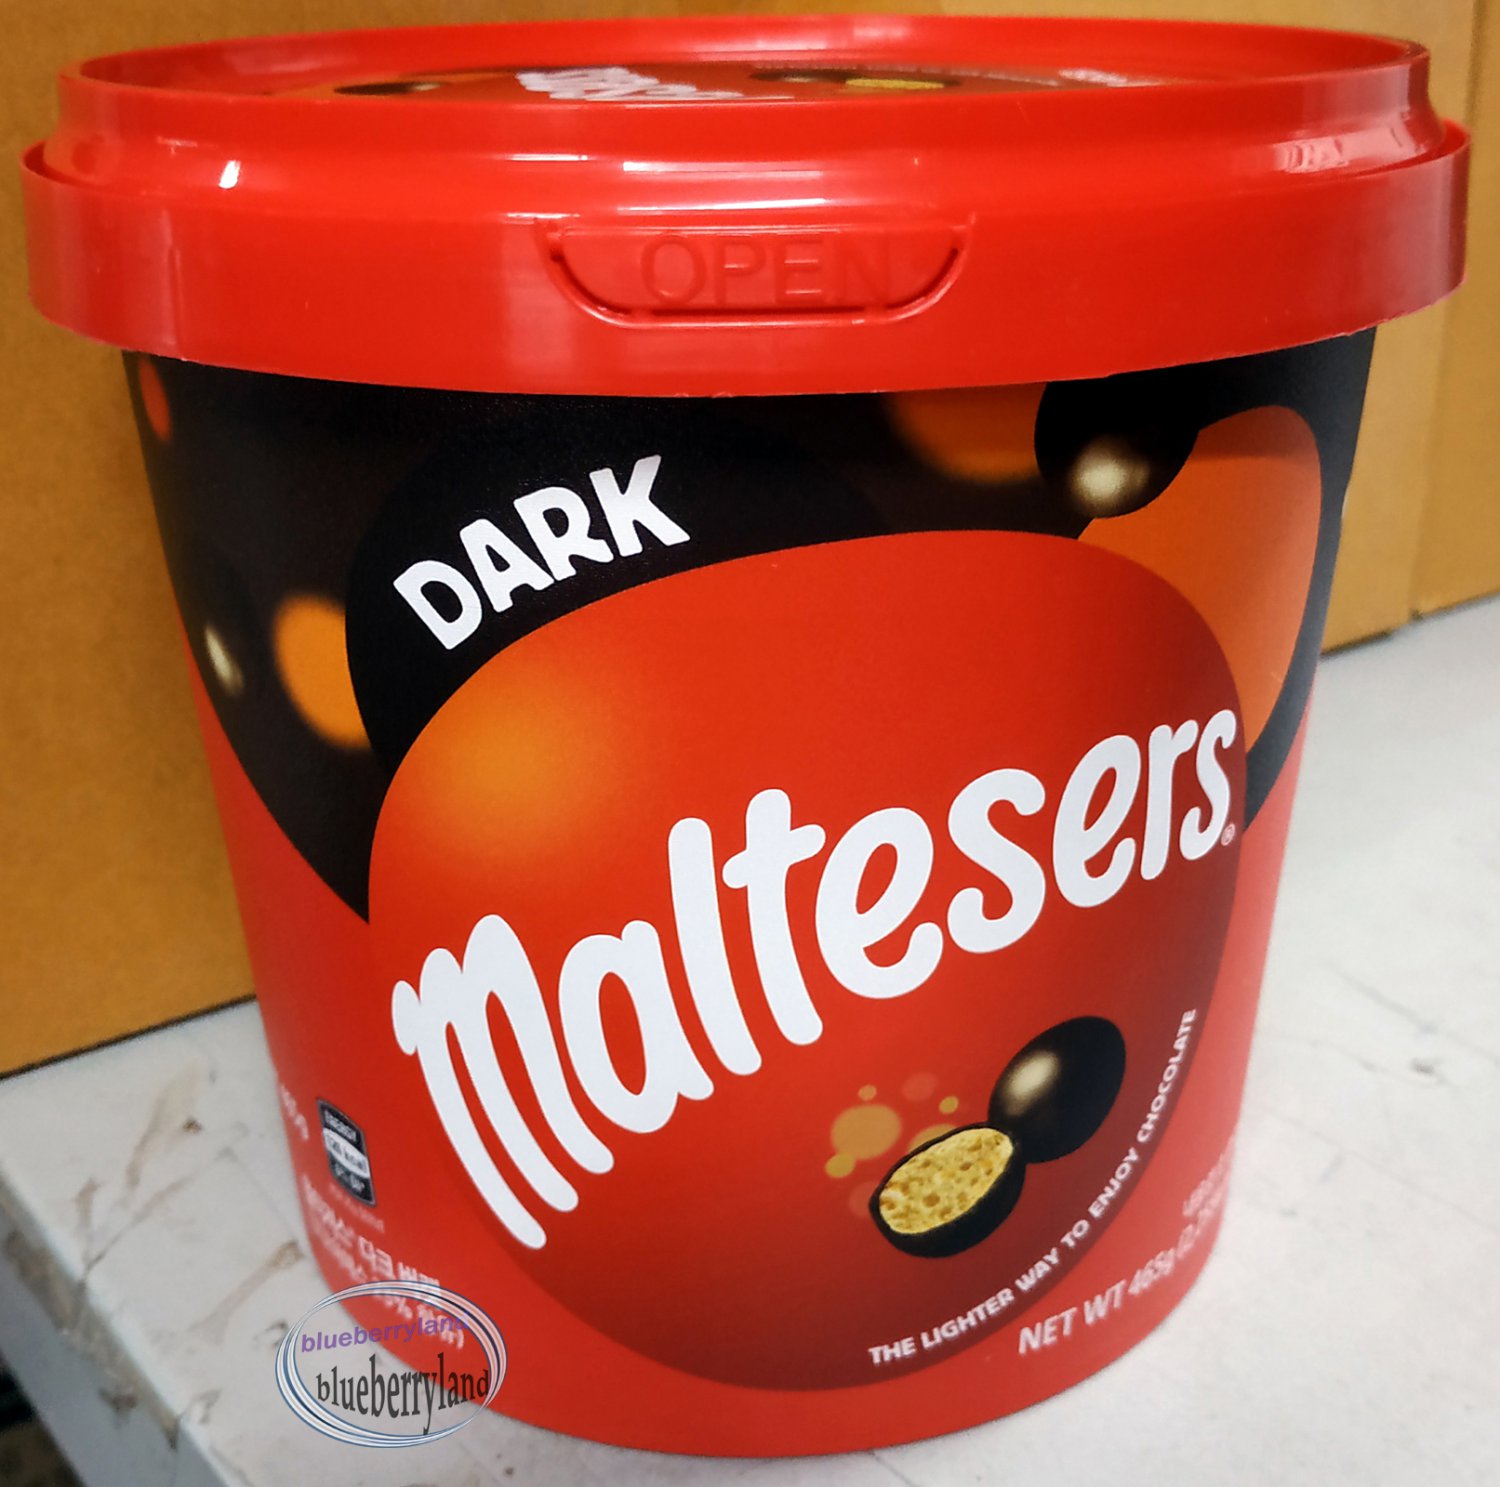 Maltesers Bucket